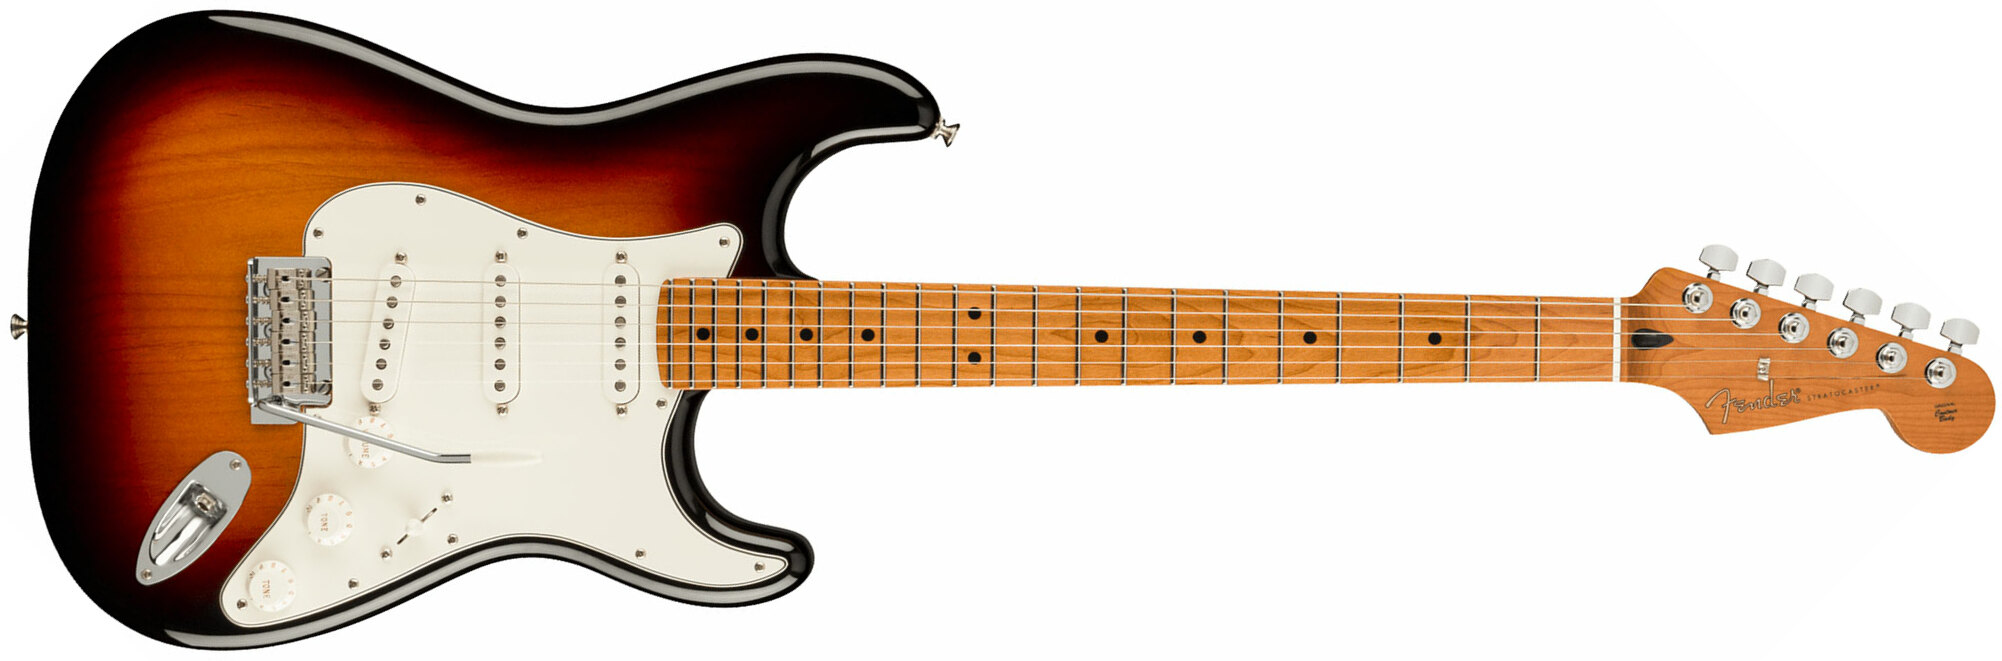 Fender Strat Player Roasted Maple Neck Ltd Mex 3s Trem Mn - 3 Color Sunburst - Elektrische gitaar in Str-vorm - Main picture